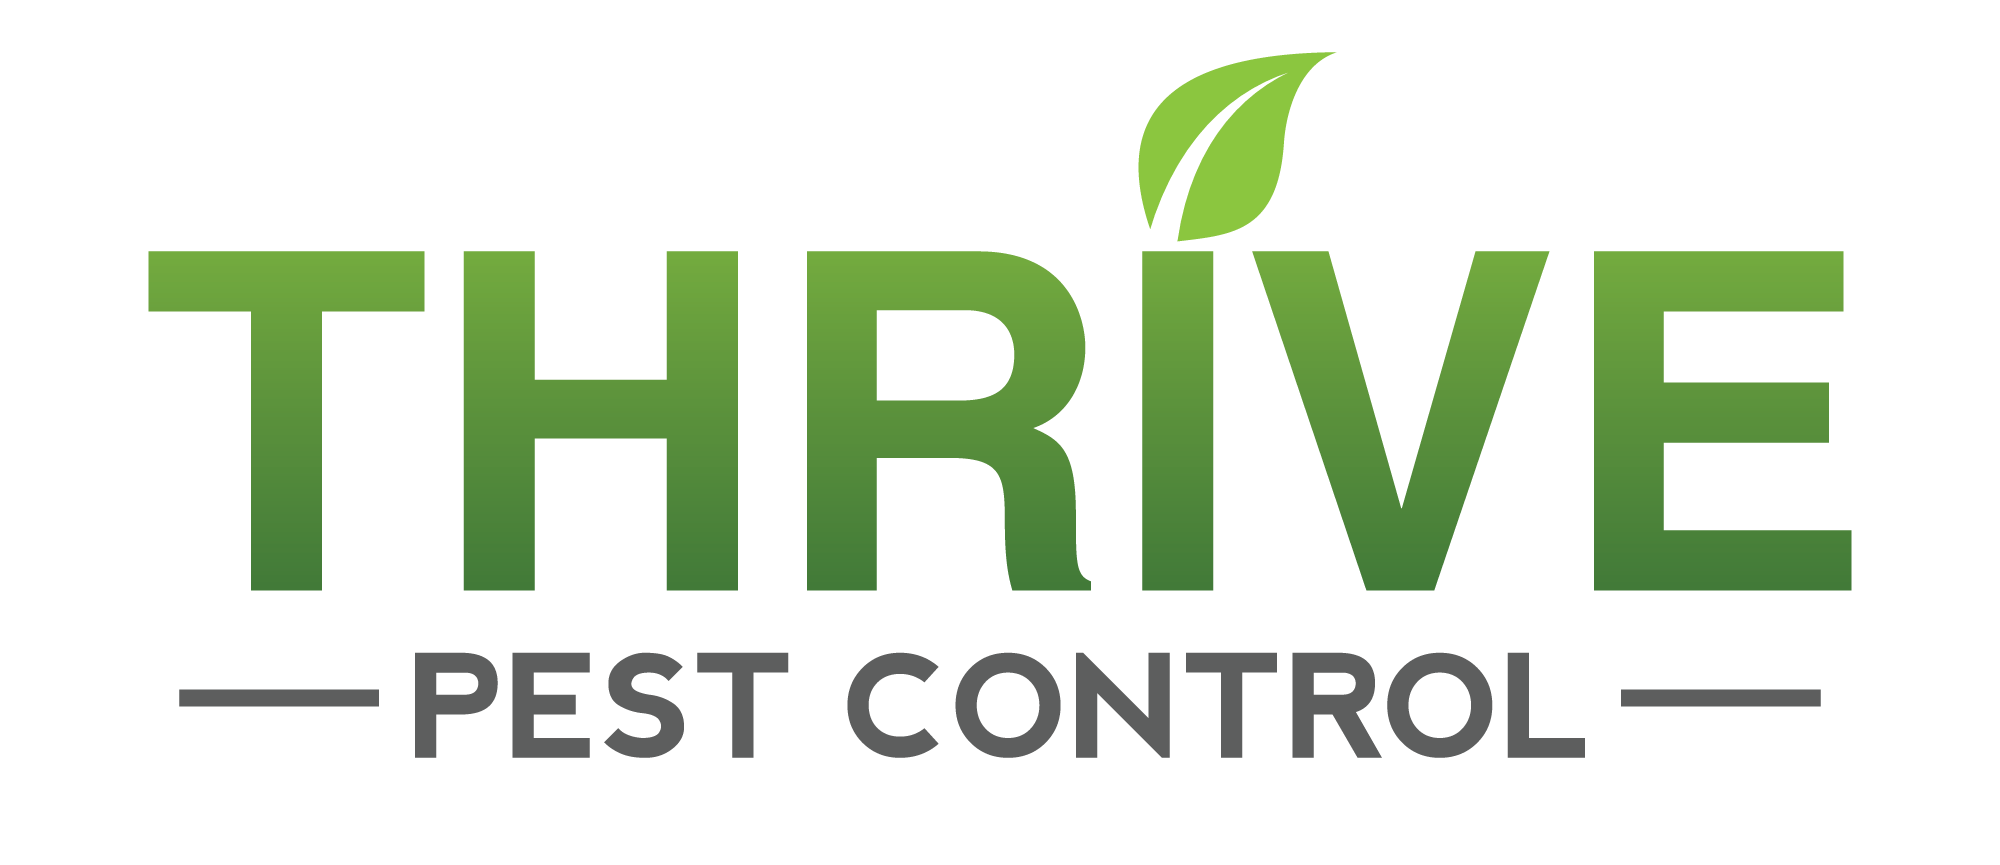 Thrive Pest Control Blog